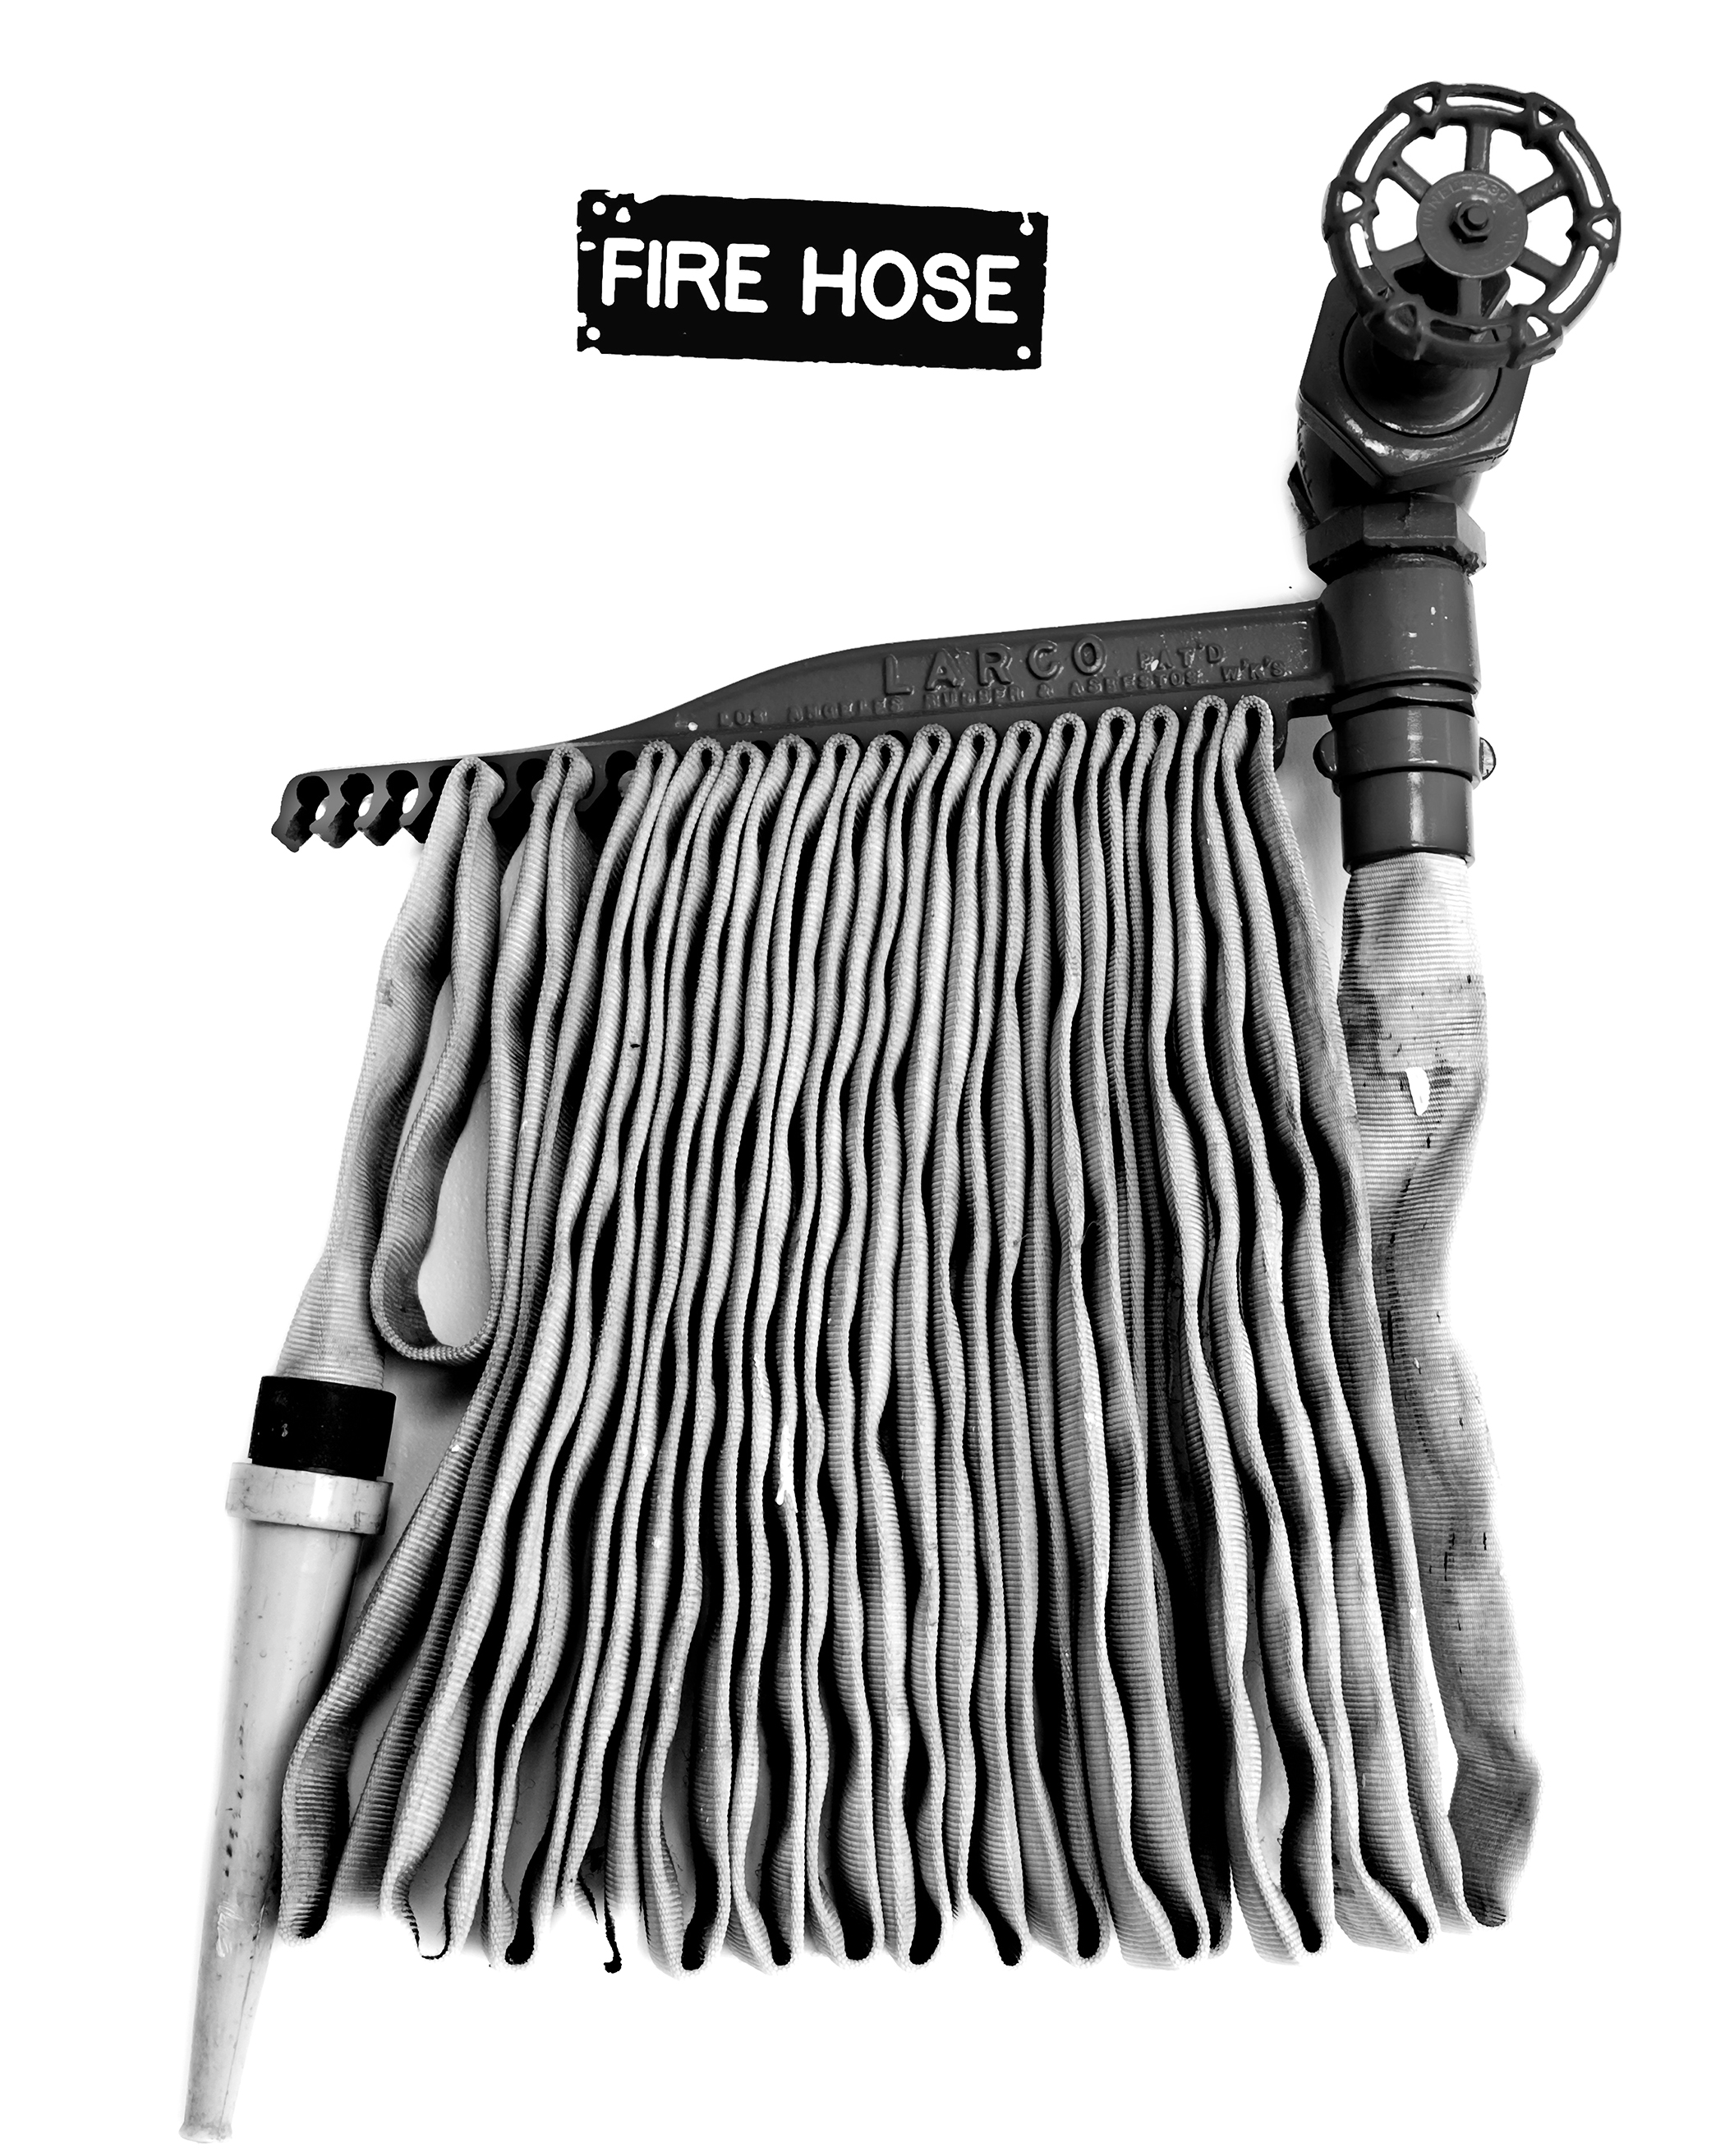 Firehose, Los Angeles, CA, 2013.jpg